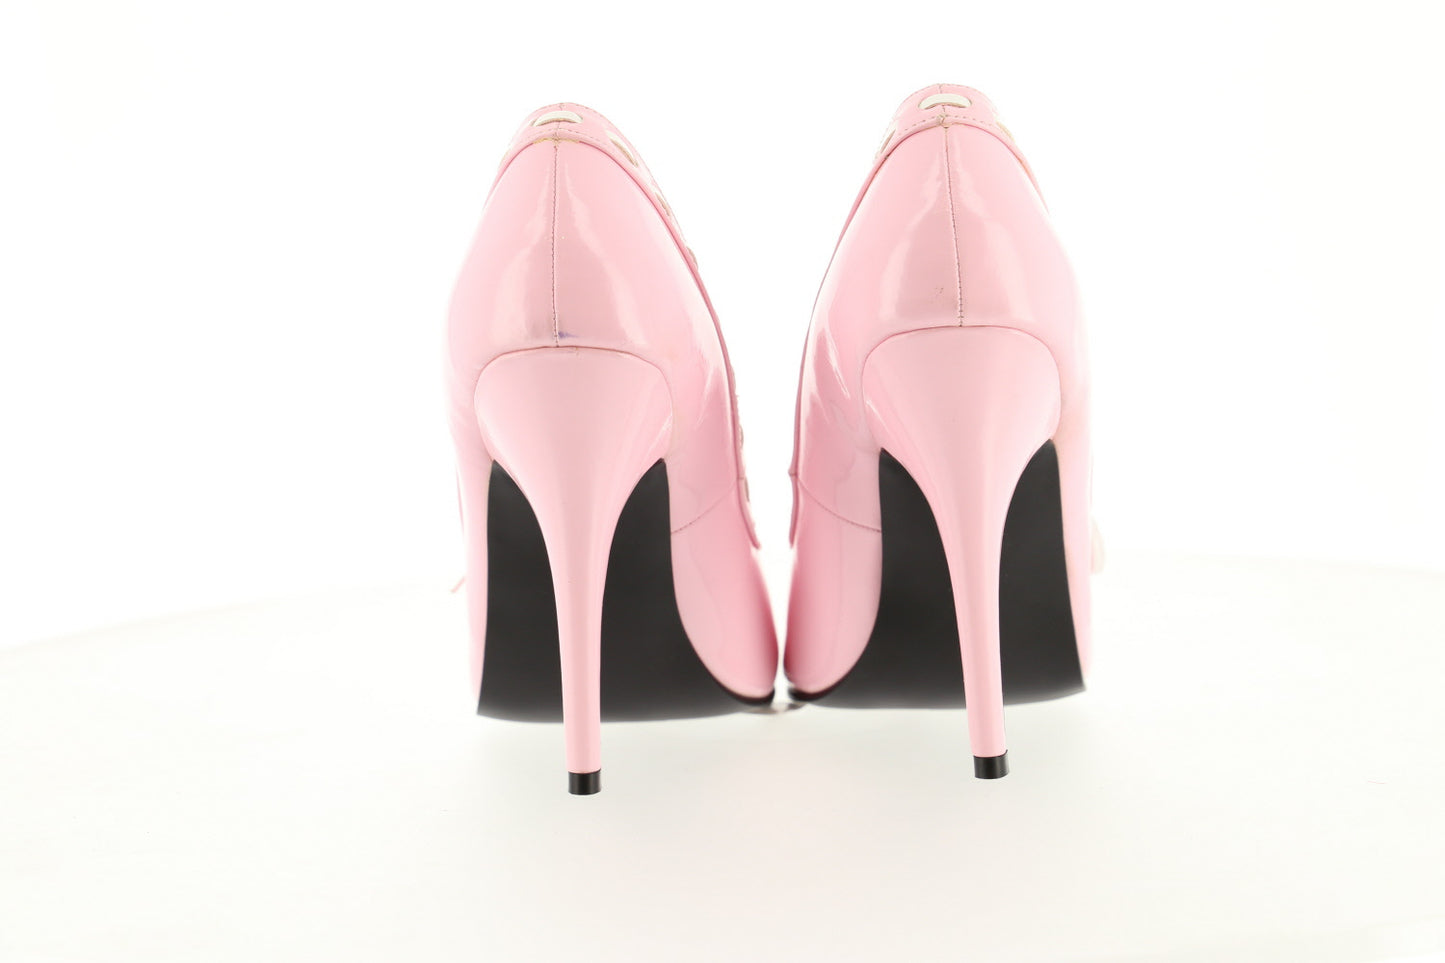 SEDUCE-219 Pleaser Patent High Heel Alternative Footwear Discontinued Sale Stock